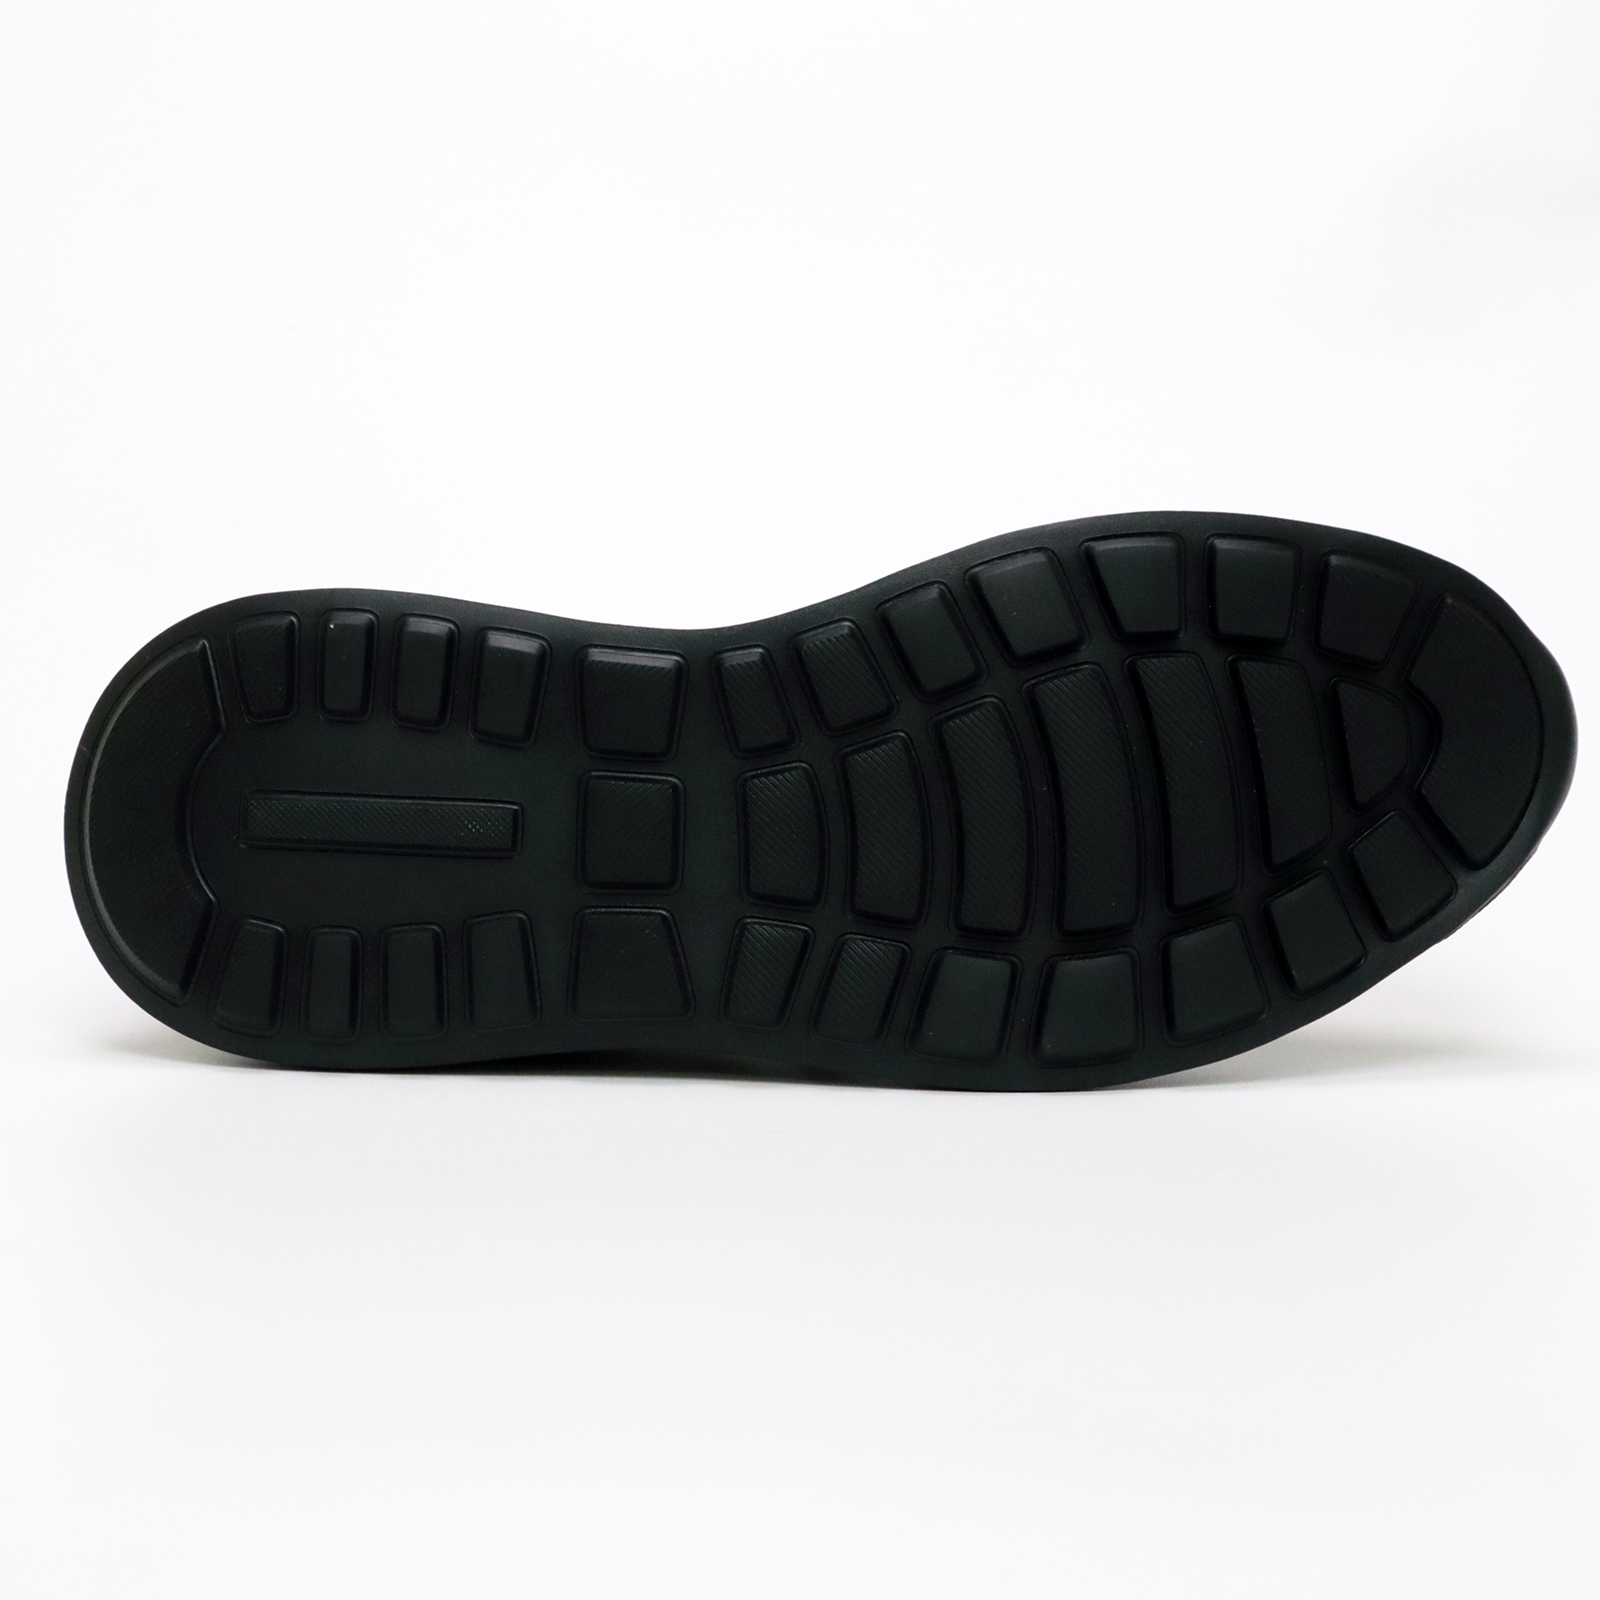 Genuine Crocodile Leather Slip On Shoes Business Fashion Black Shoes For Men